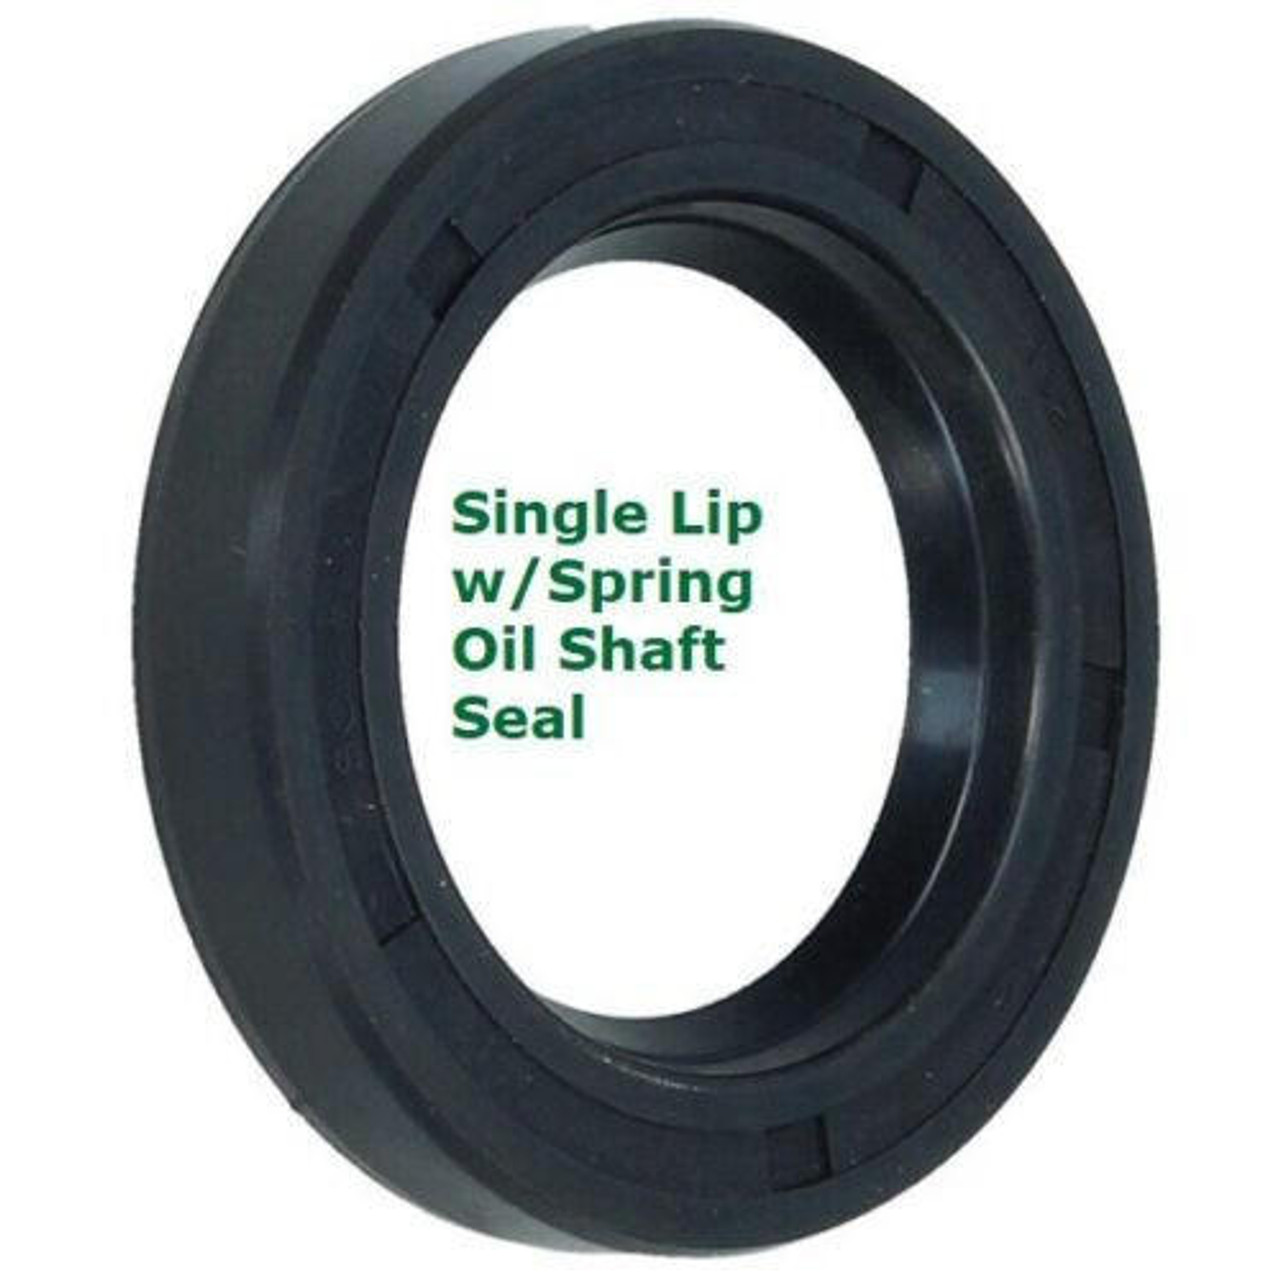 Metric Oil Shaft Seal 330 x 370 x 18mm   Single Lip   Price for 1 pc